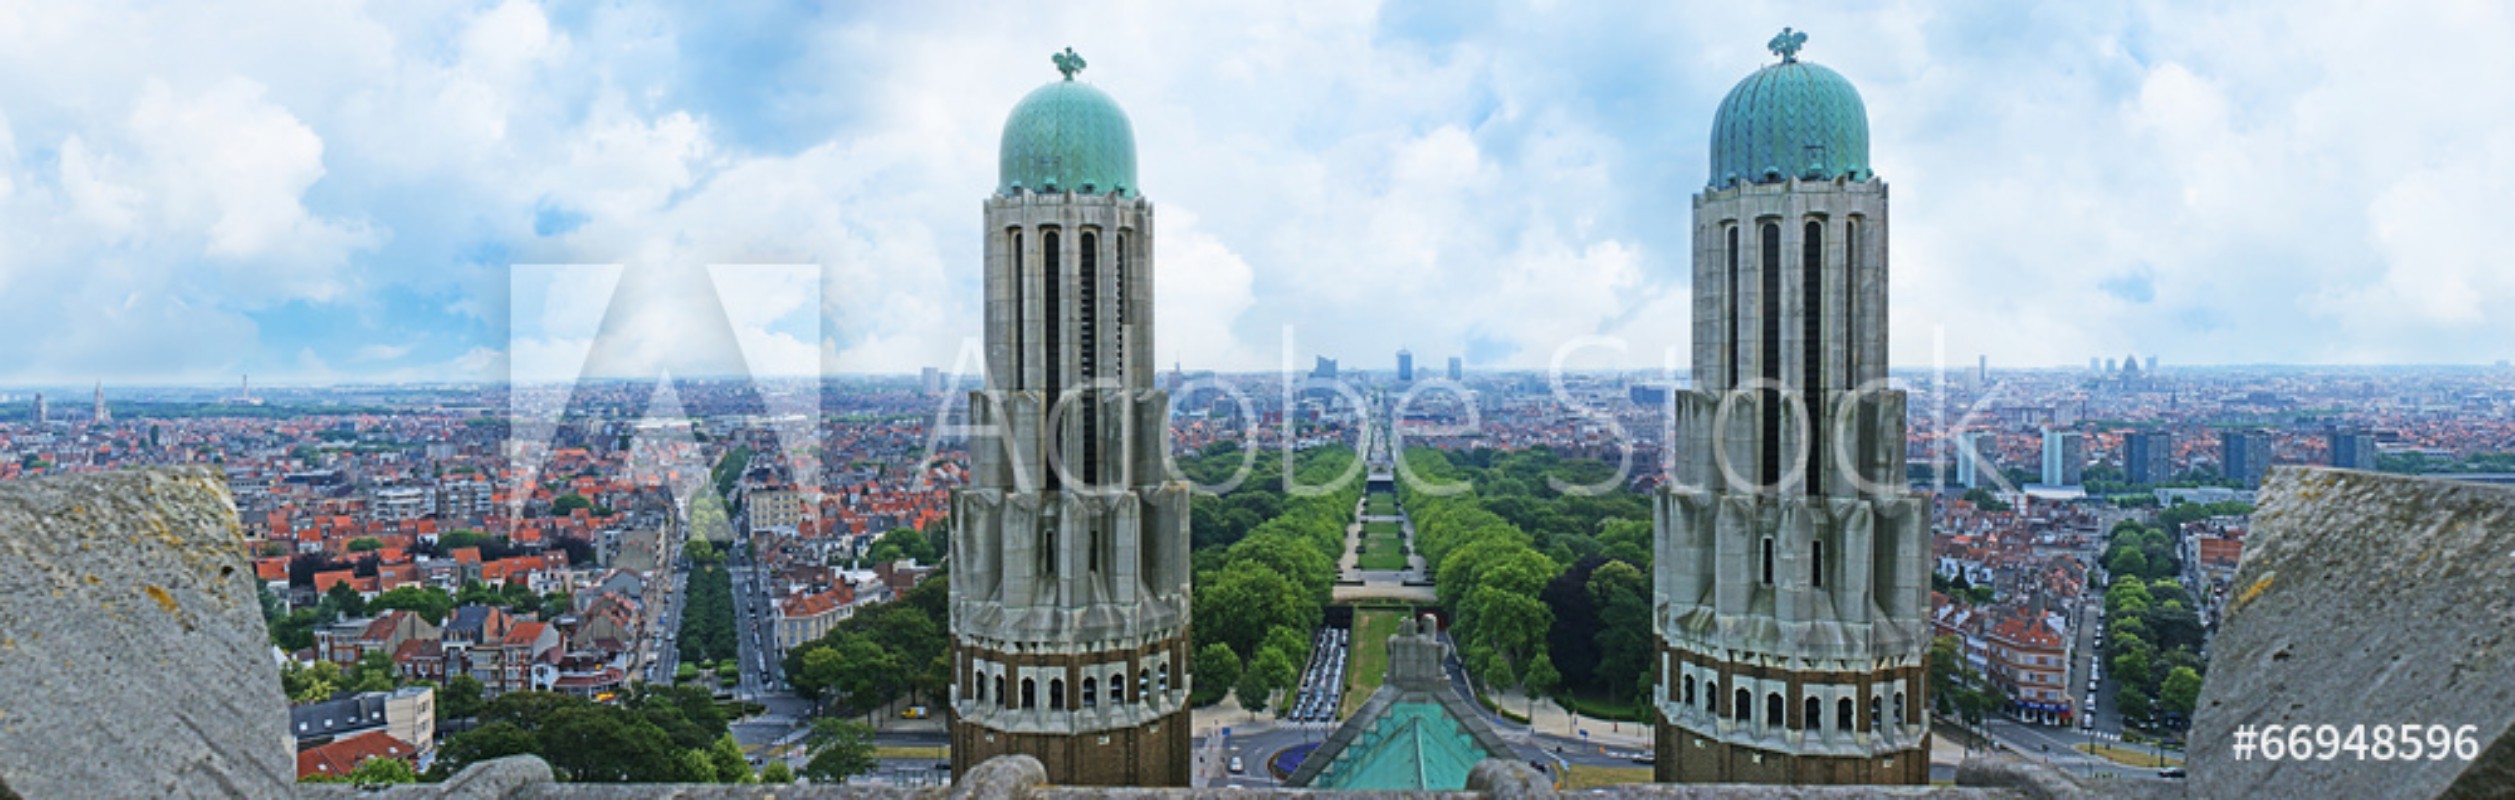 Image de Panorama of Brussels